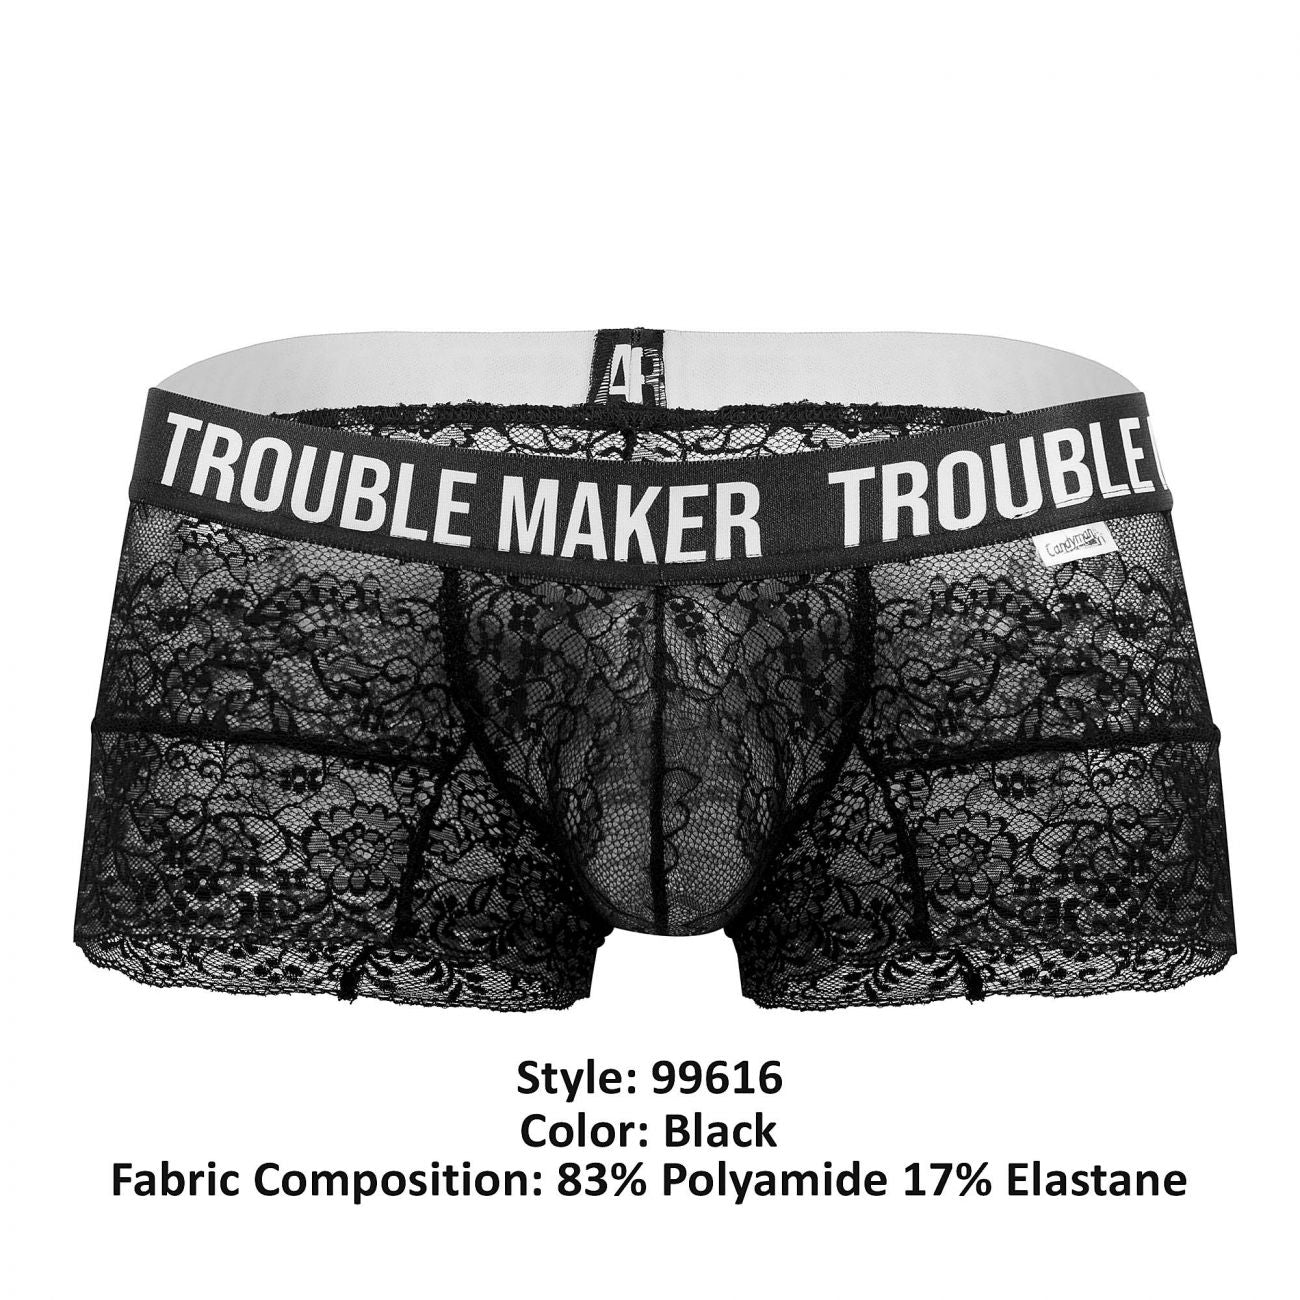 CandyMan 99616 Trouble Maker Lace Trunks Black